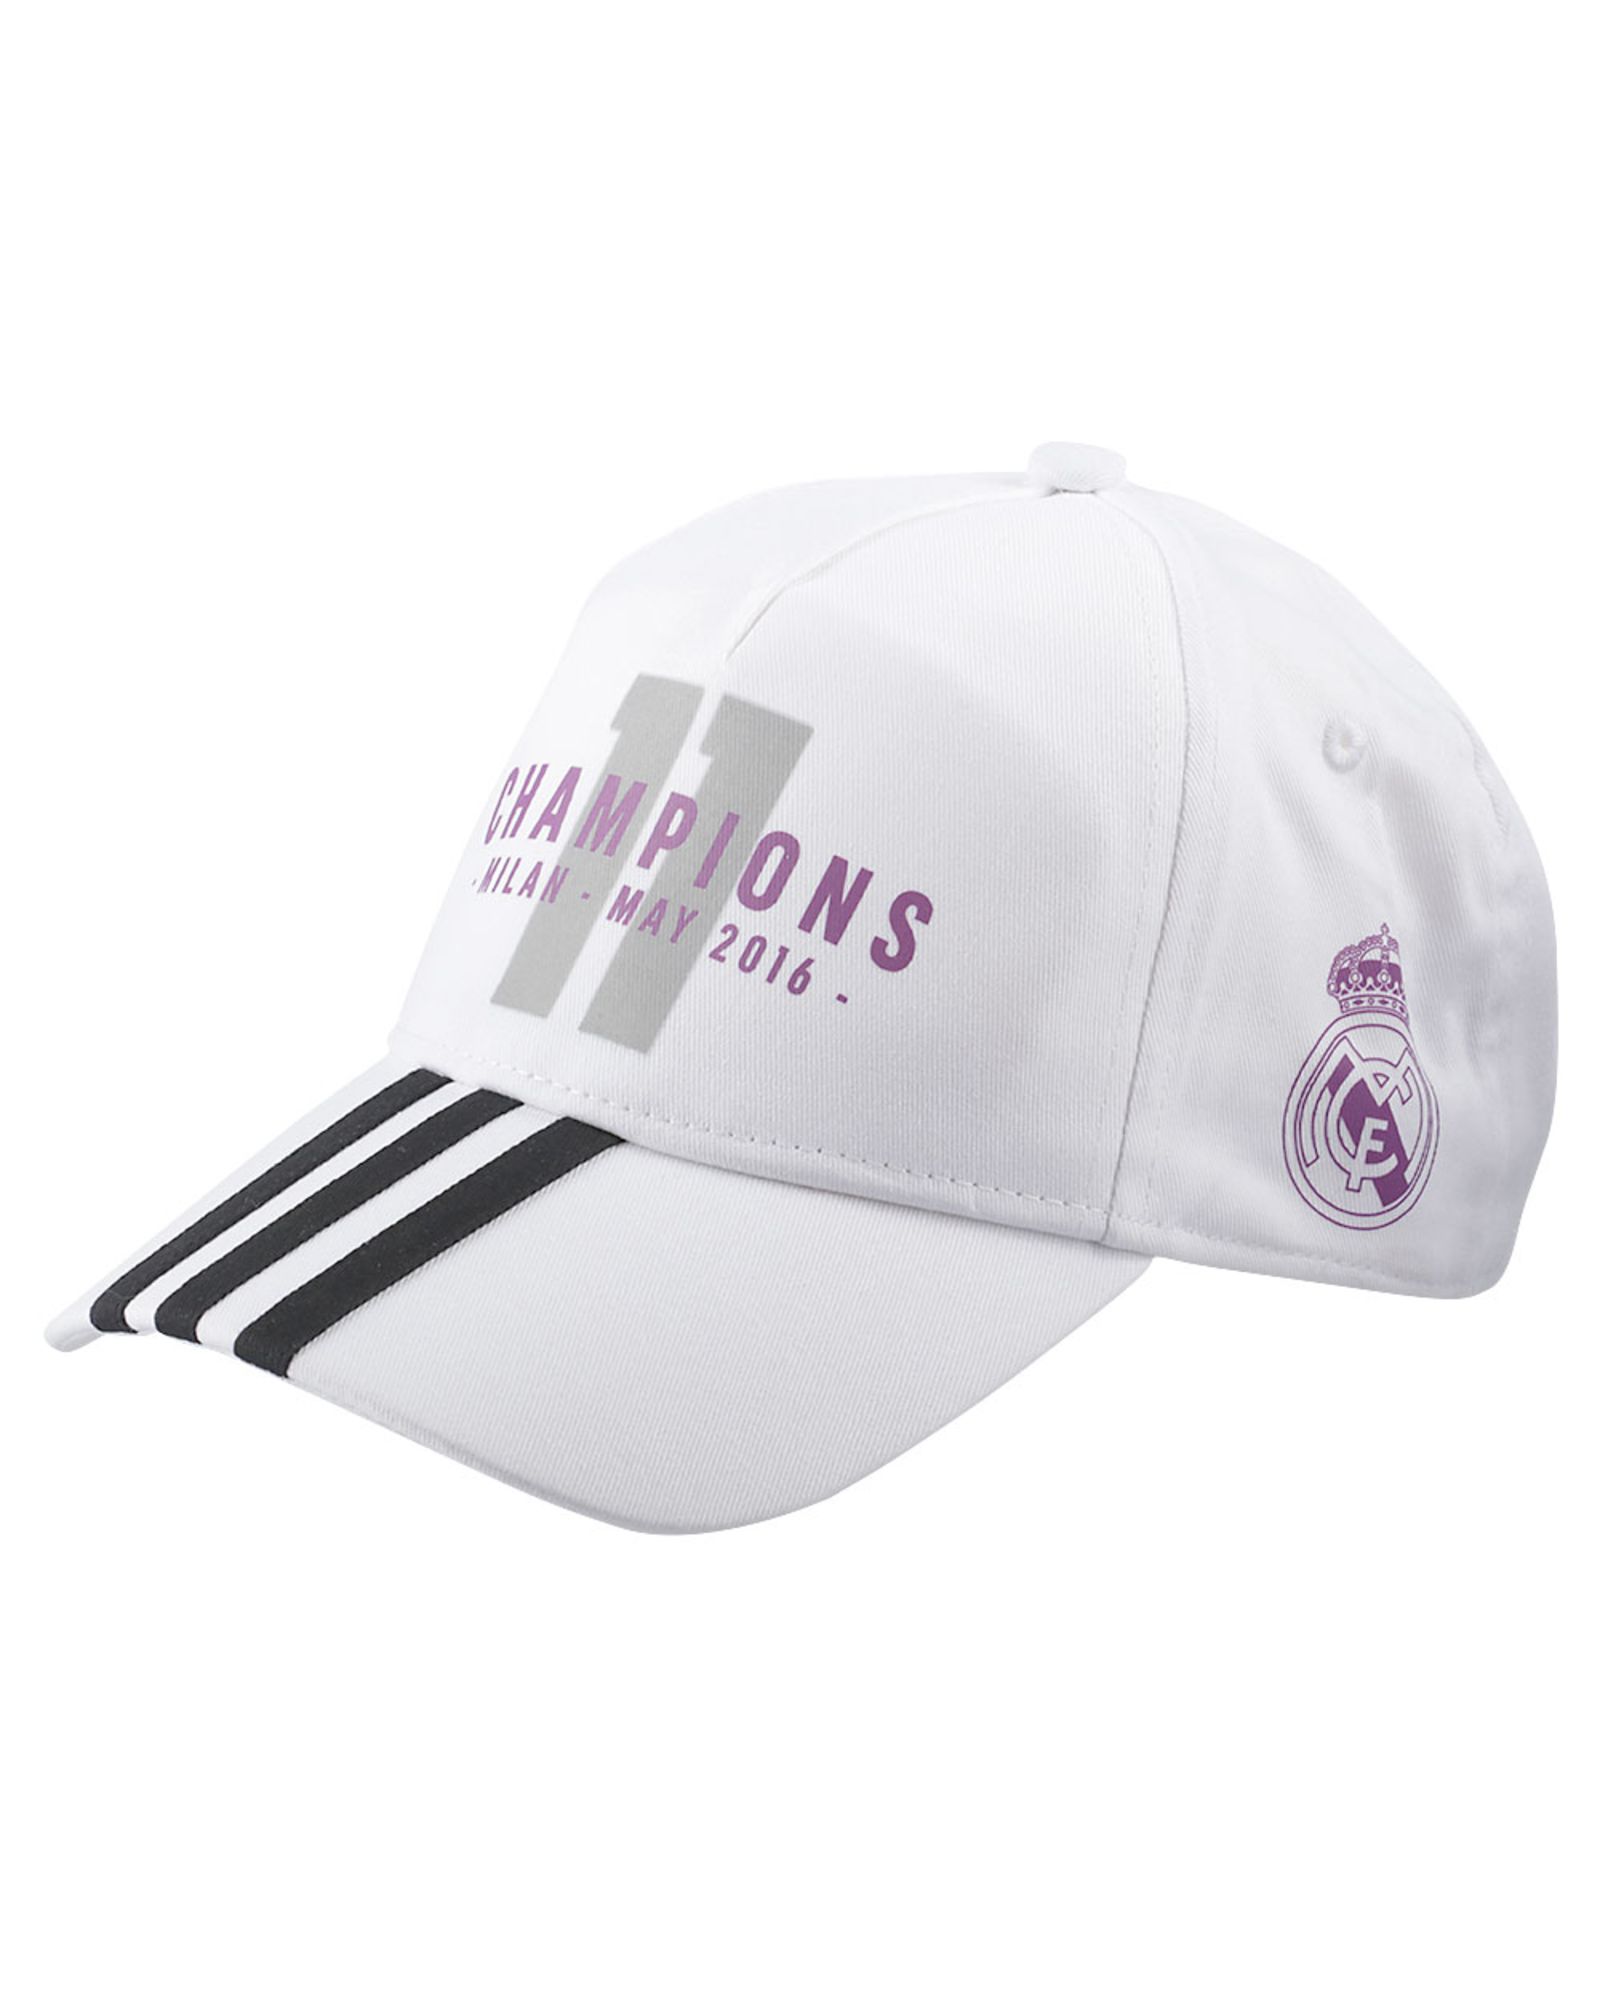 Gorra Real Madrid Adidas